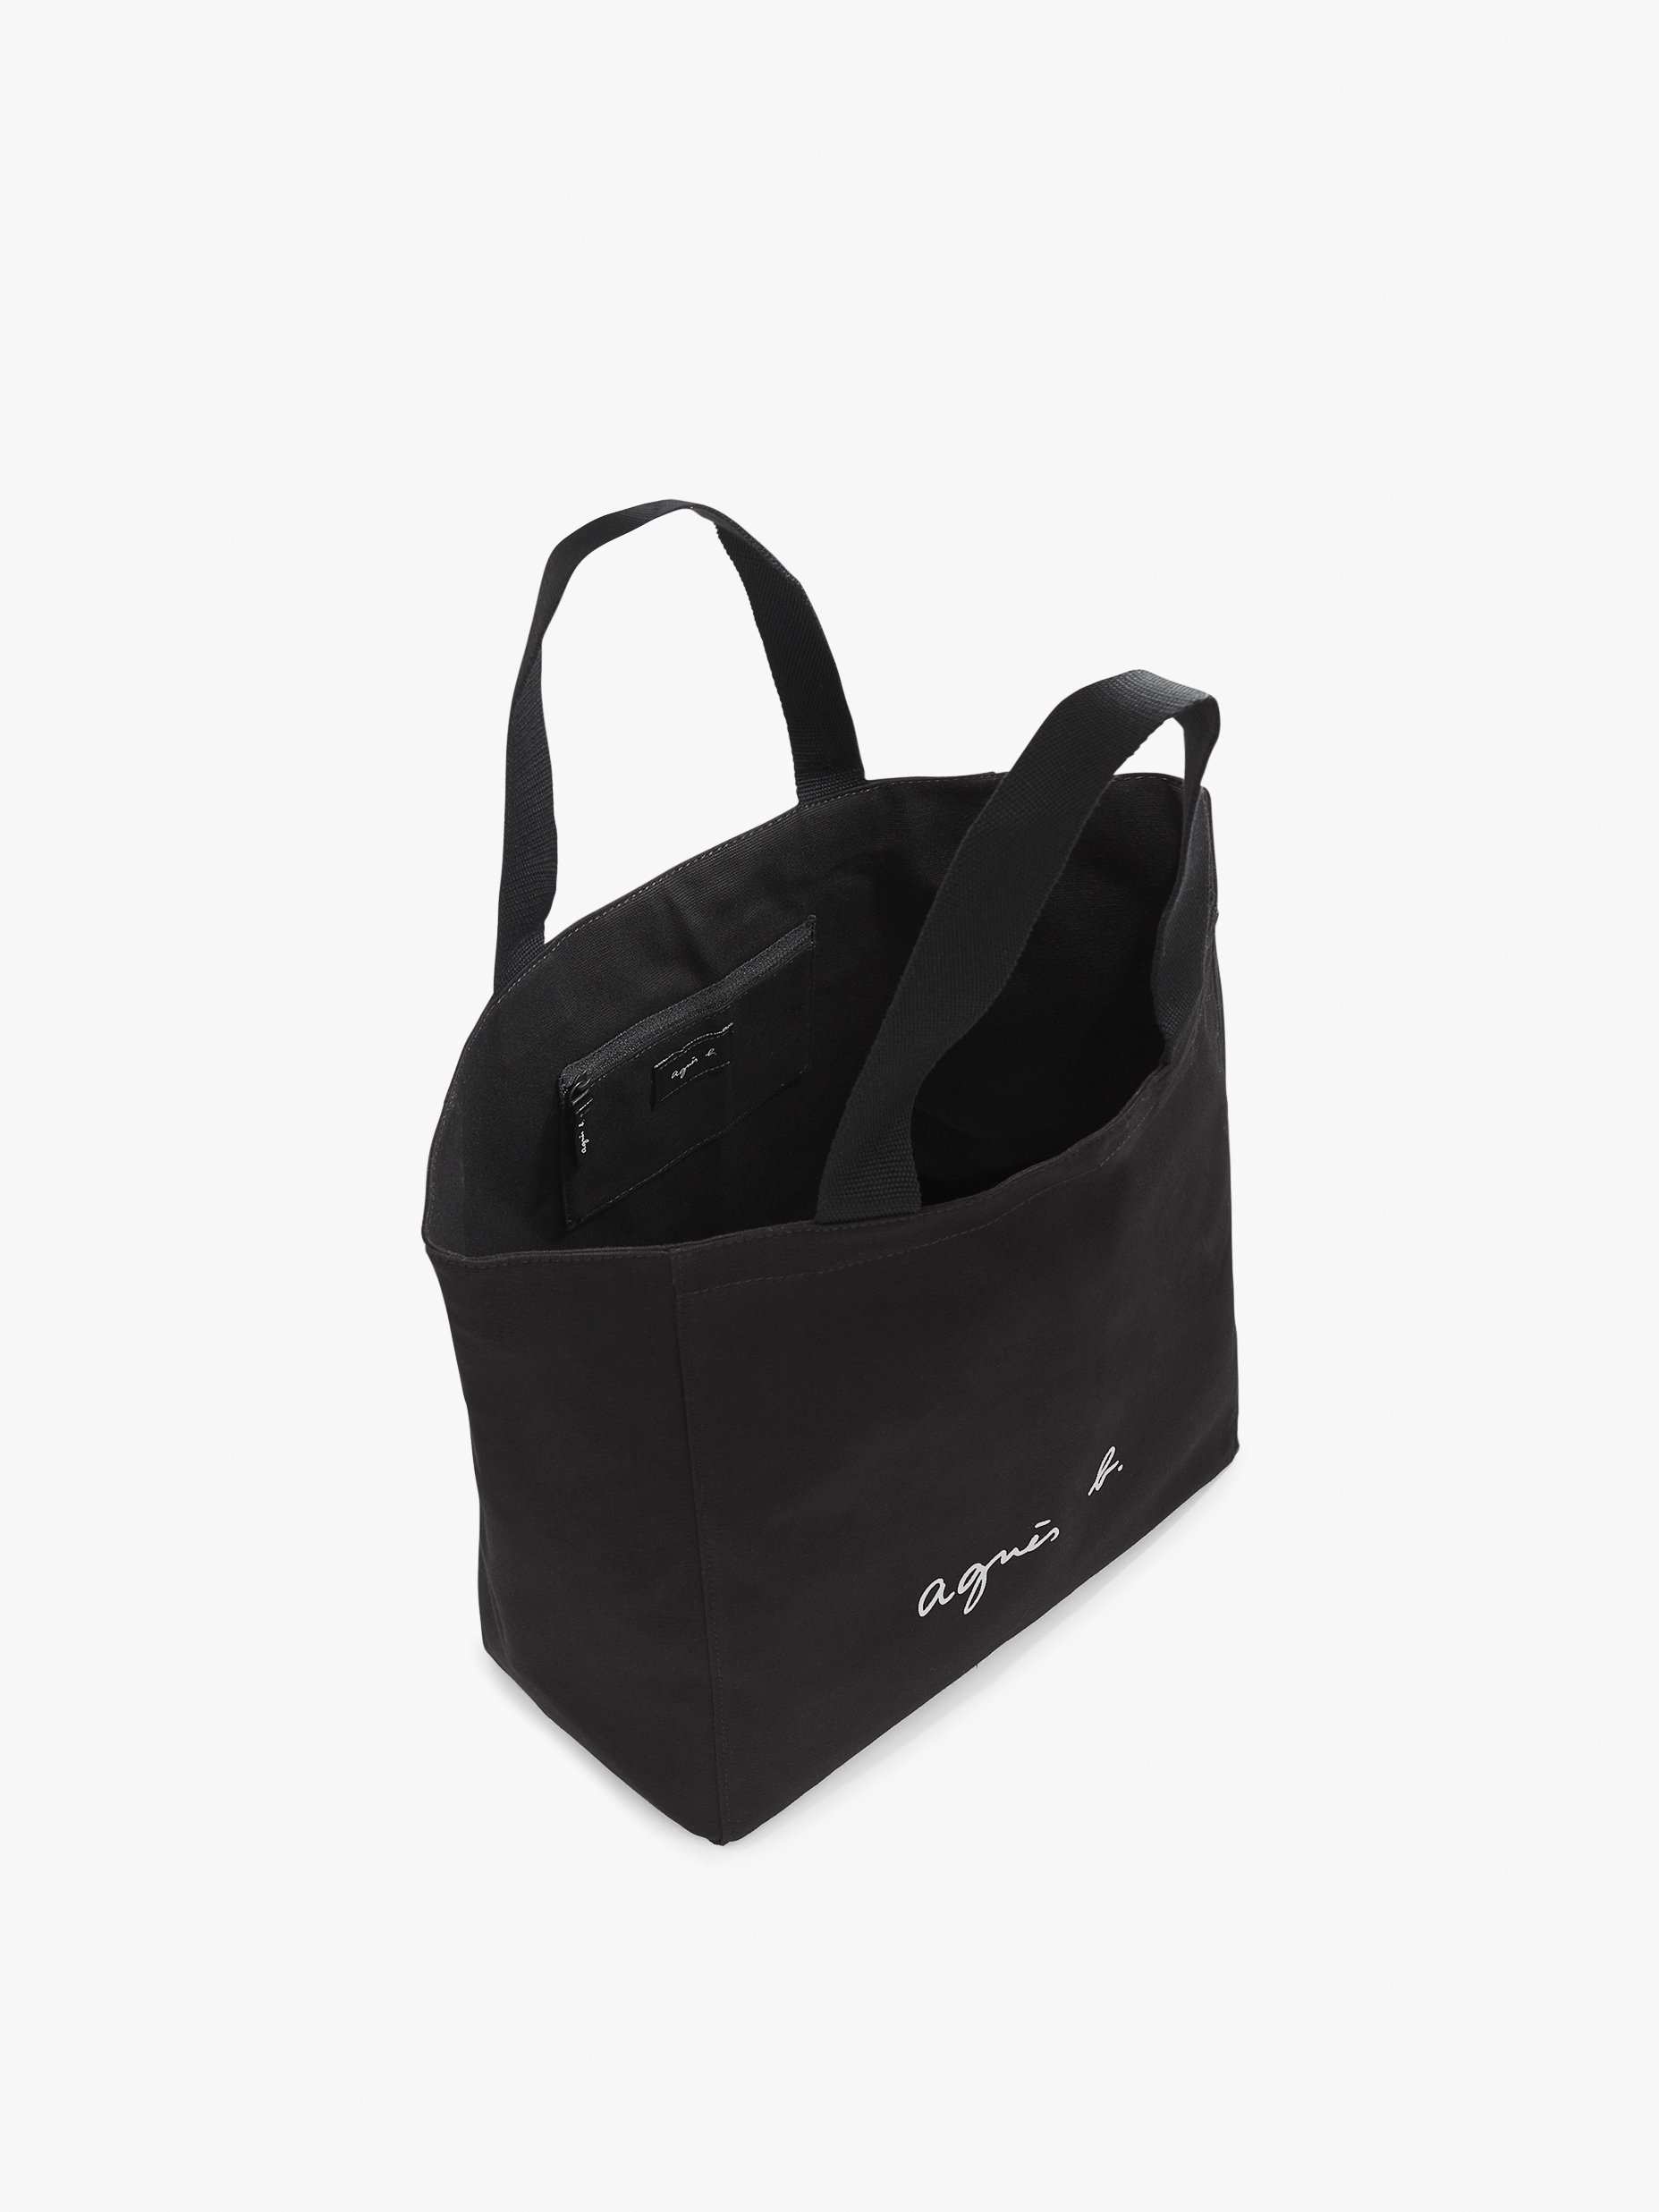 Black Shimmer Shoulder Tote Bag | ADFY-ANGBAPR-004 | Cilory.com